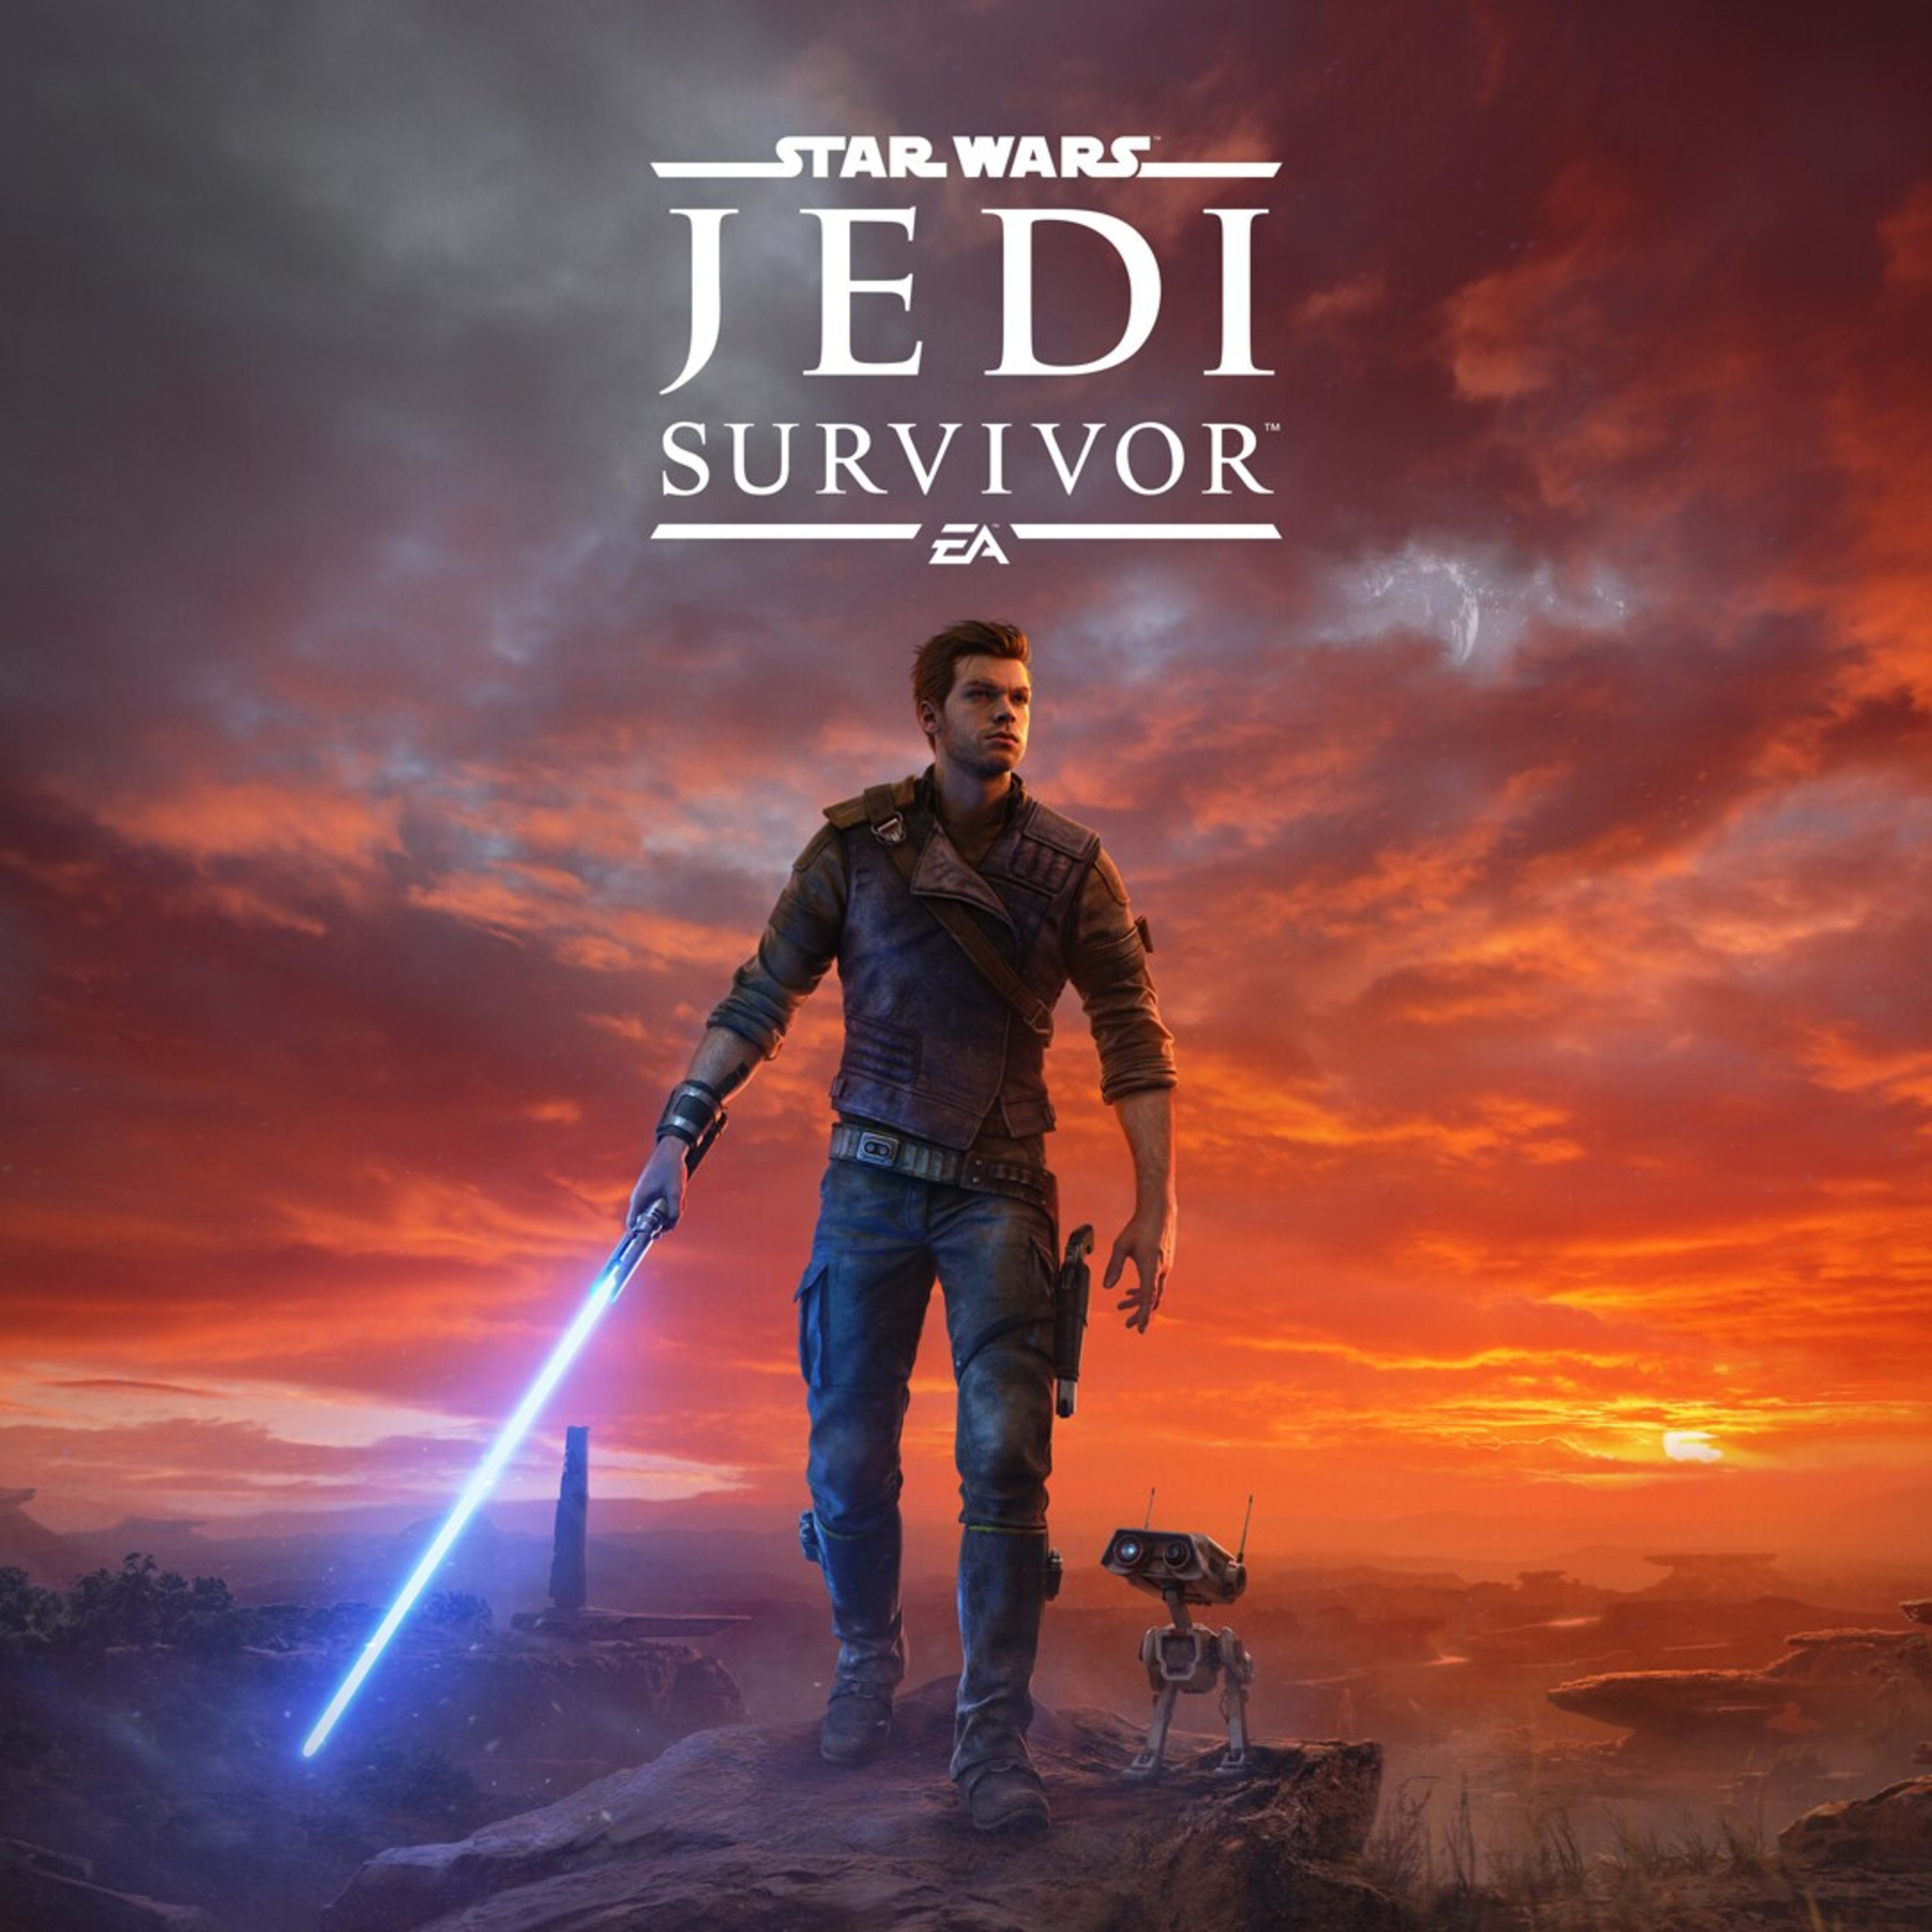 STAR WARS Jedi: Survivor EA Play code for PC